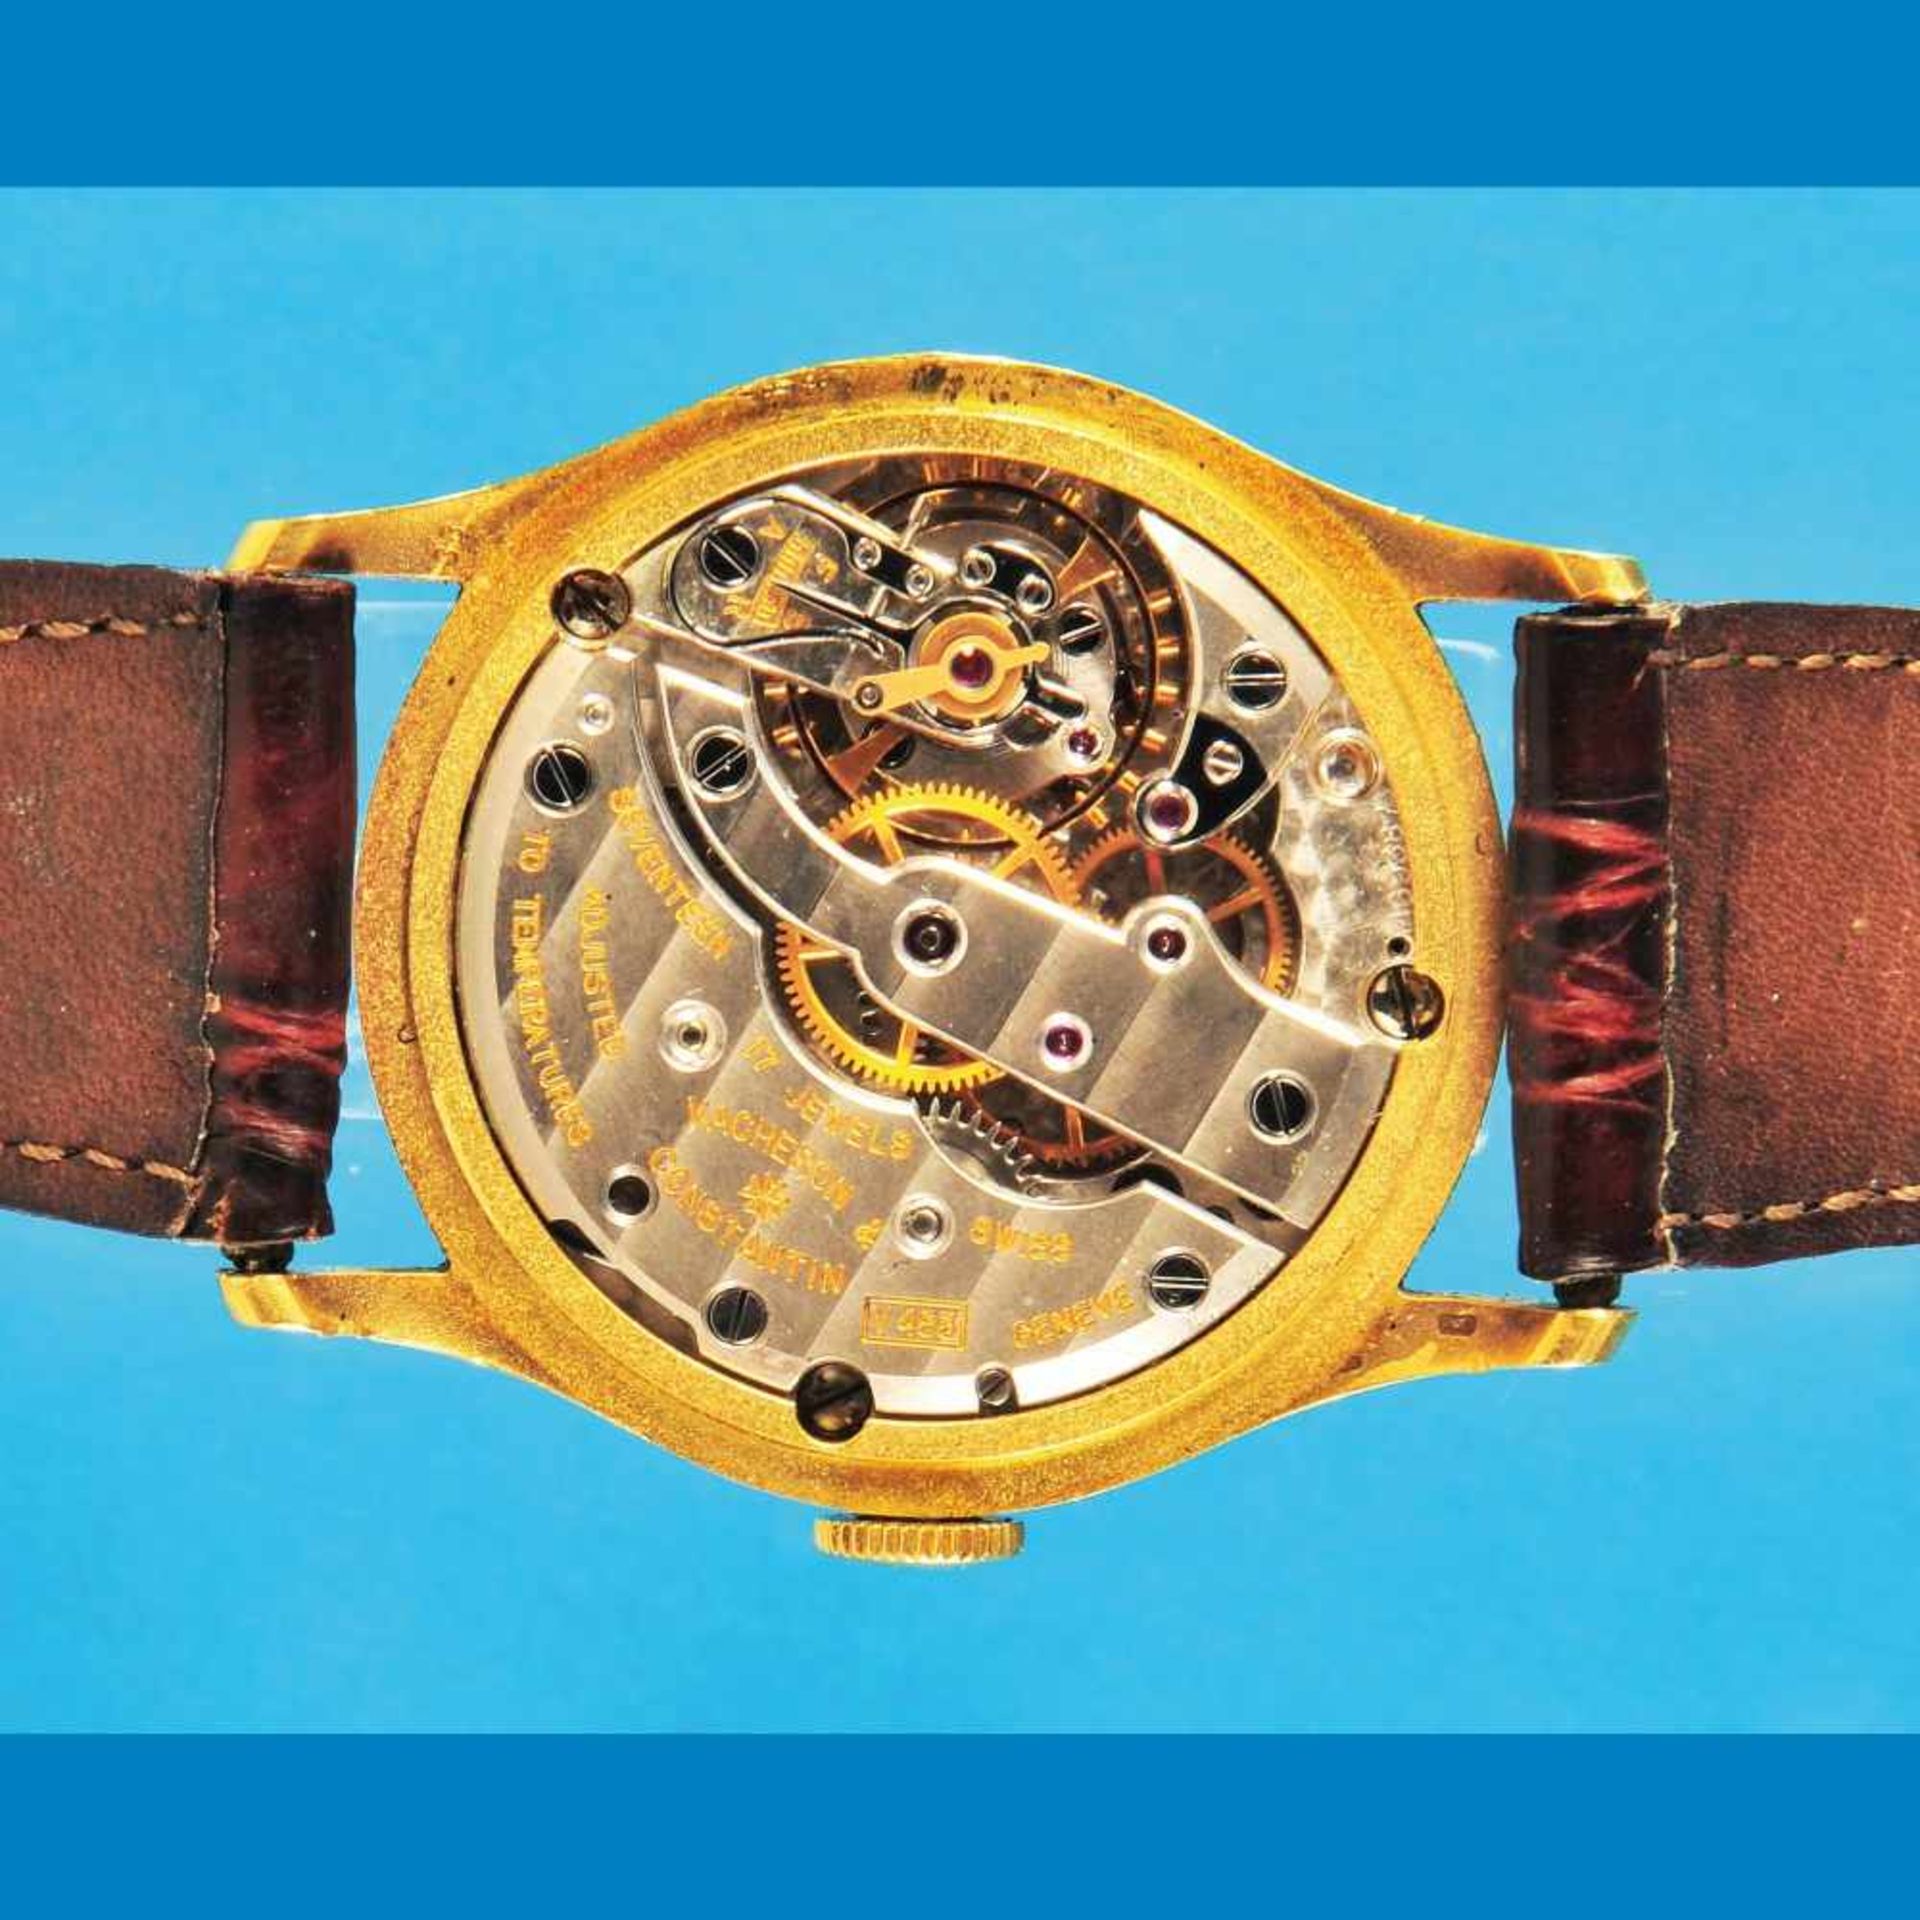 Vacheron & Constantin golden wristwatch - Image 2 of 2